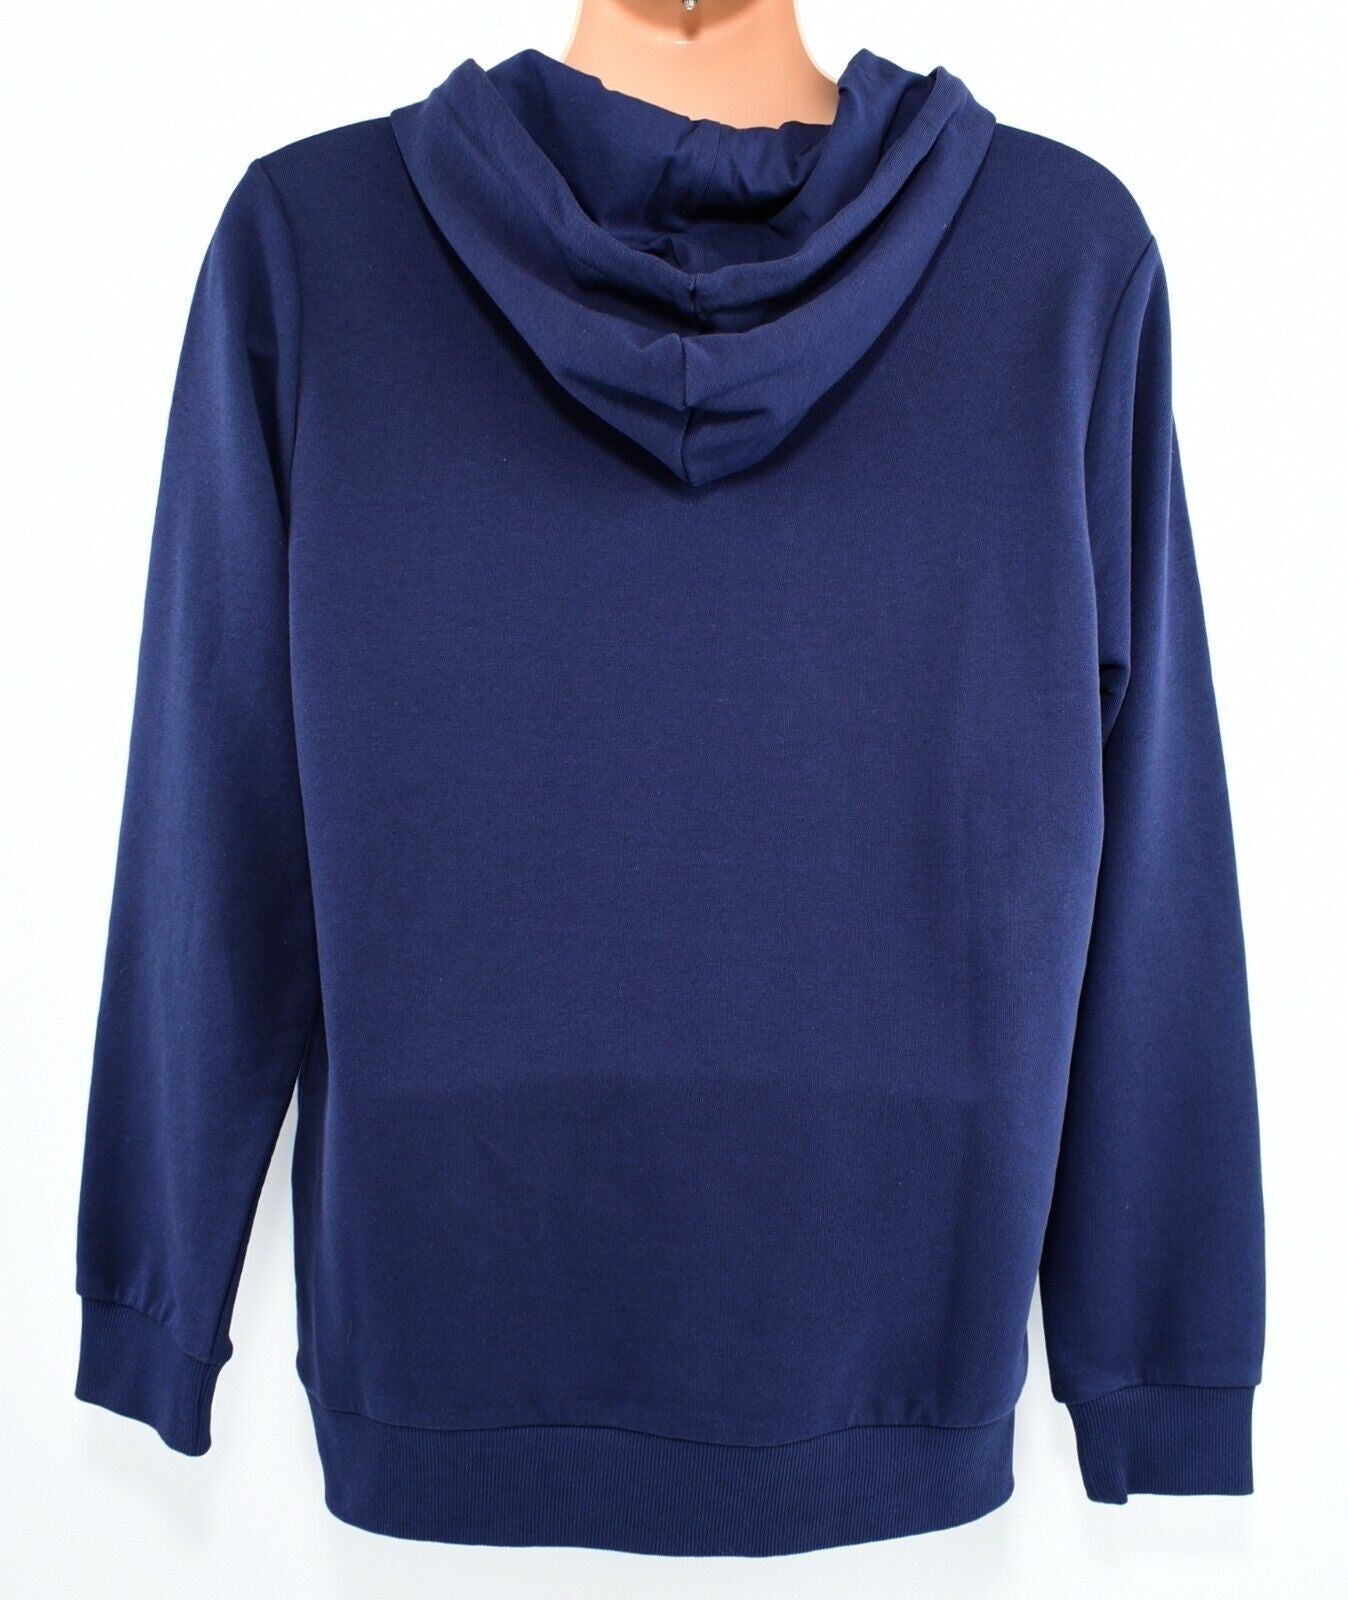 PUMA Men's PROGRAM Hoodie, Hooded Sweatshirt, Peacoat Blue, size MEDIUM